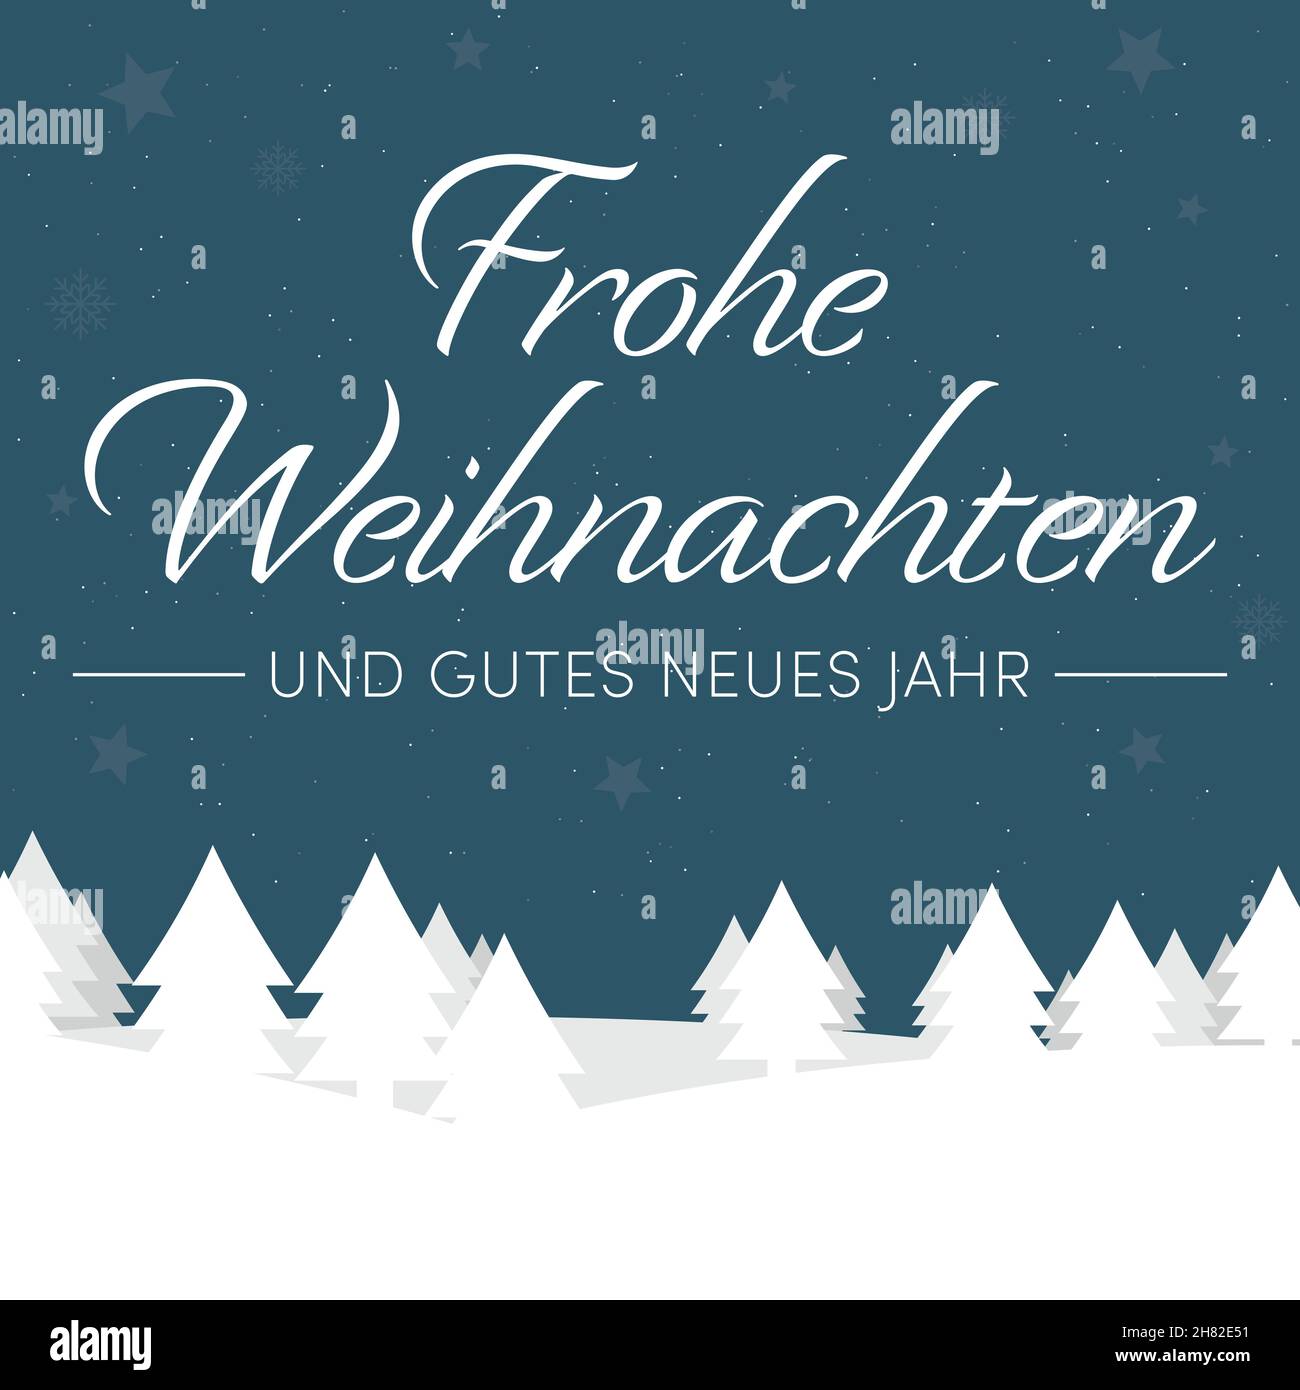 Frühen Weihnachten und gutes neues Jahr.Langue allemande.Traduction: Joyeux Noël et Bonne Année. Illustration de Vecteur